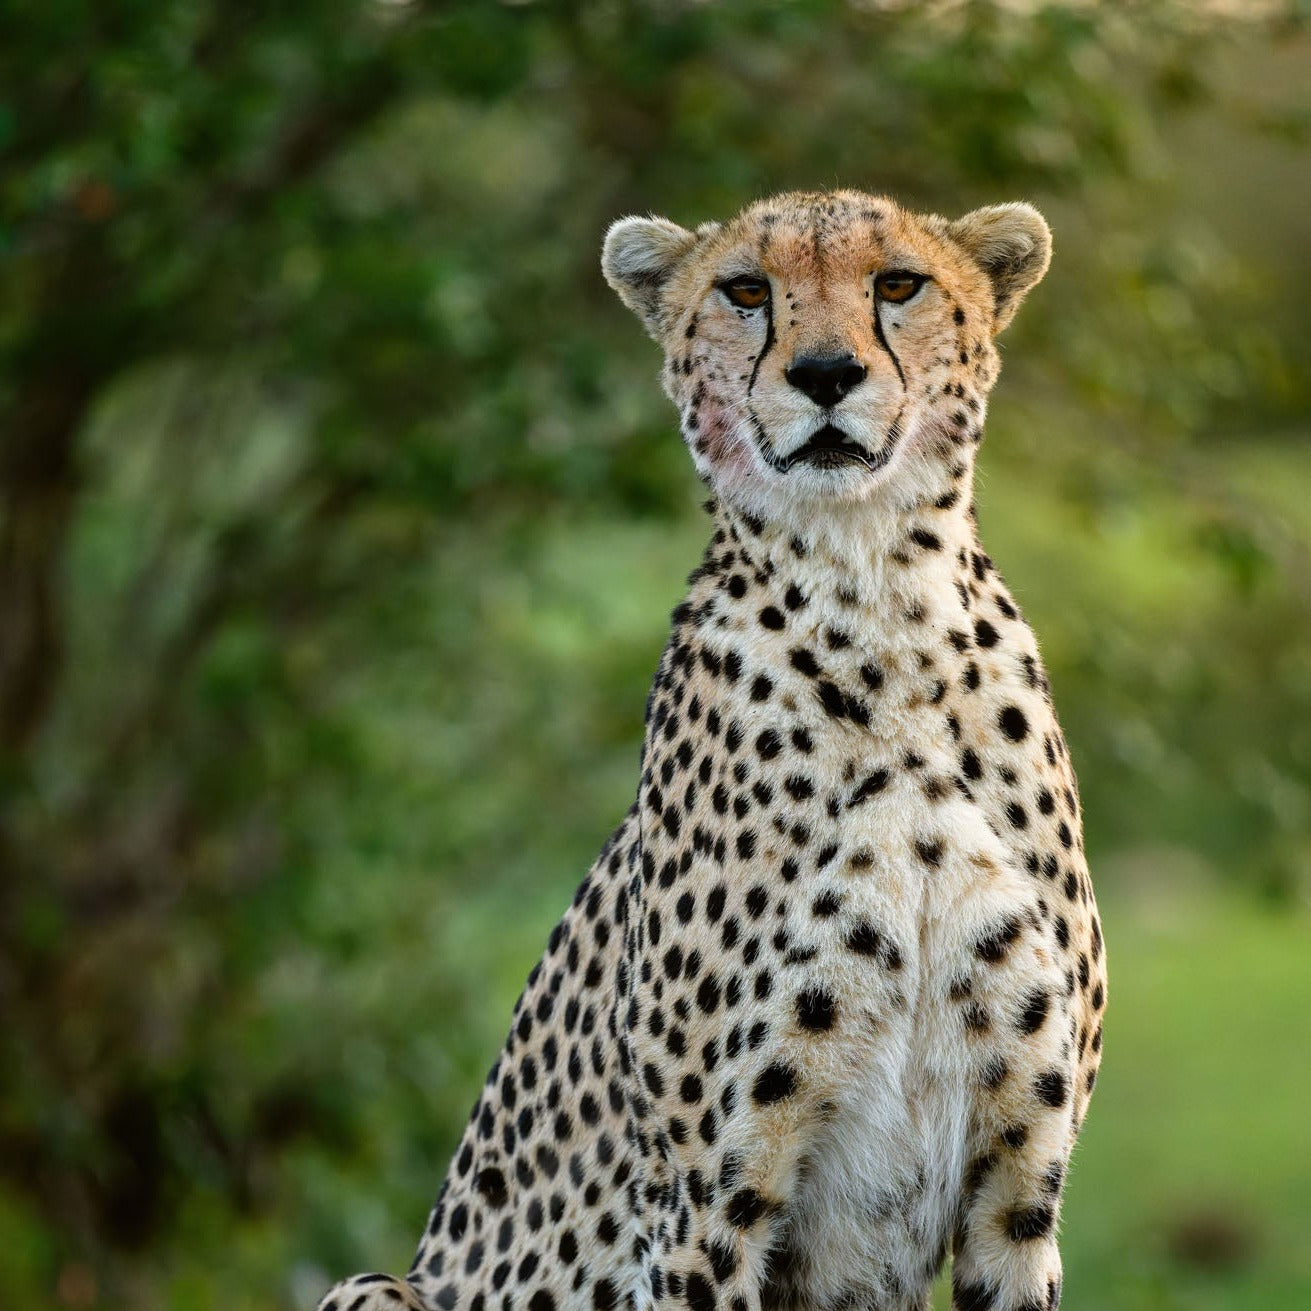 Cheetah Queen